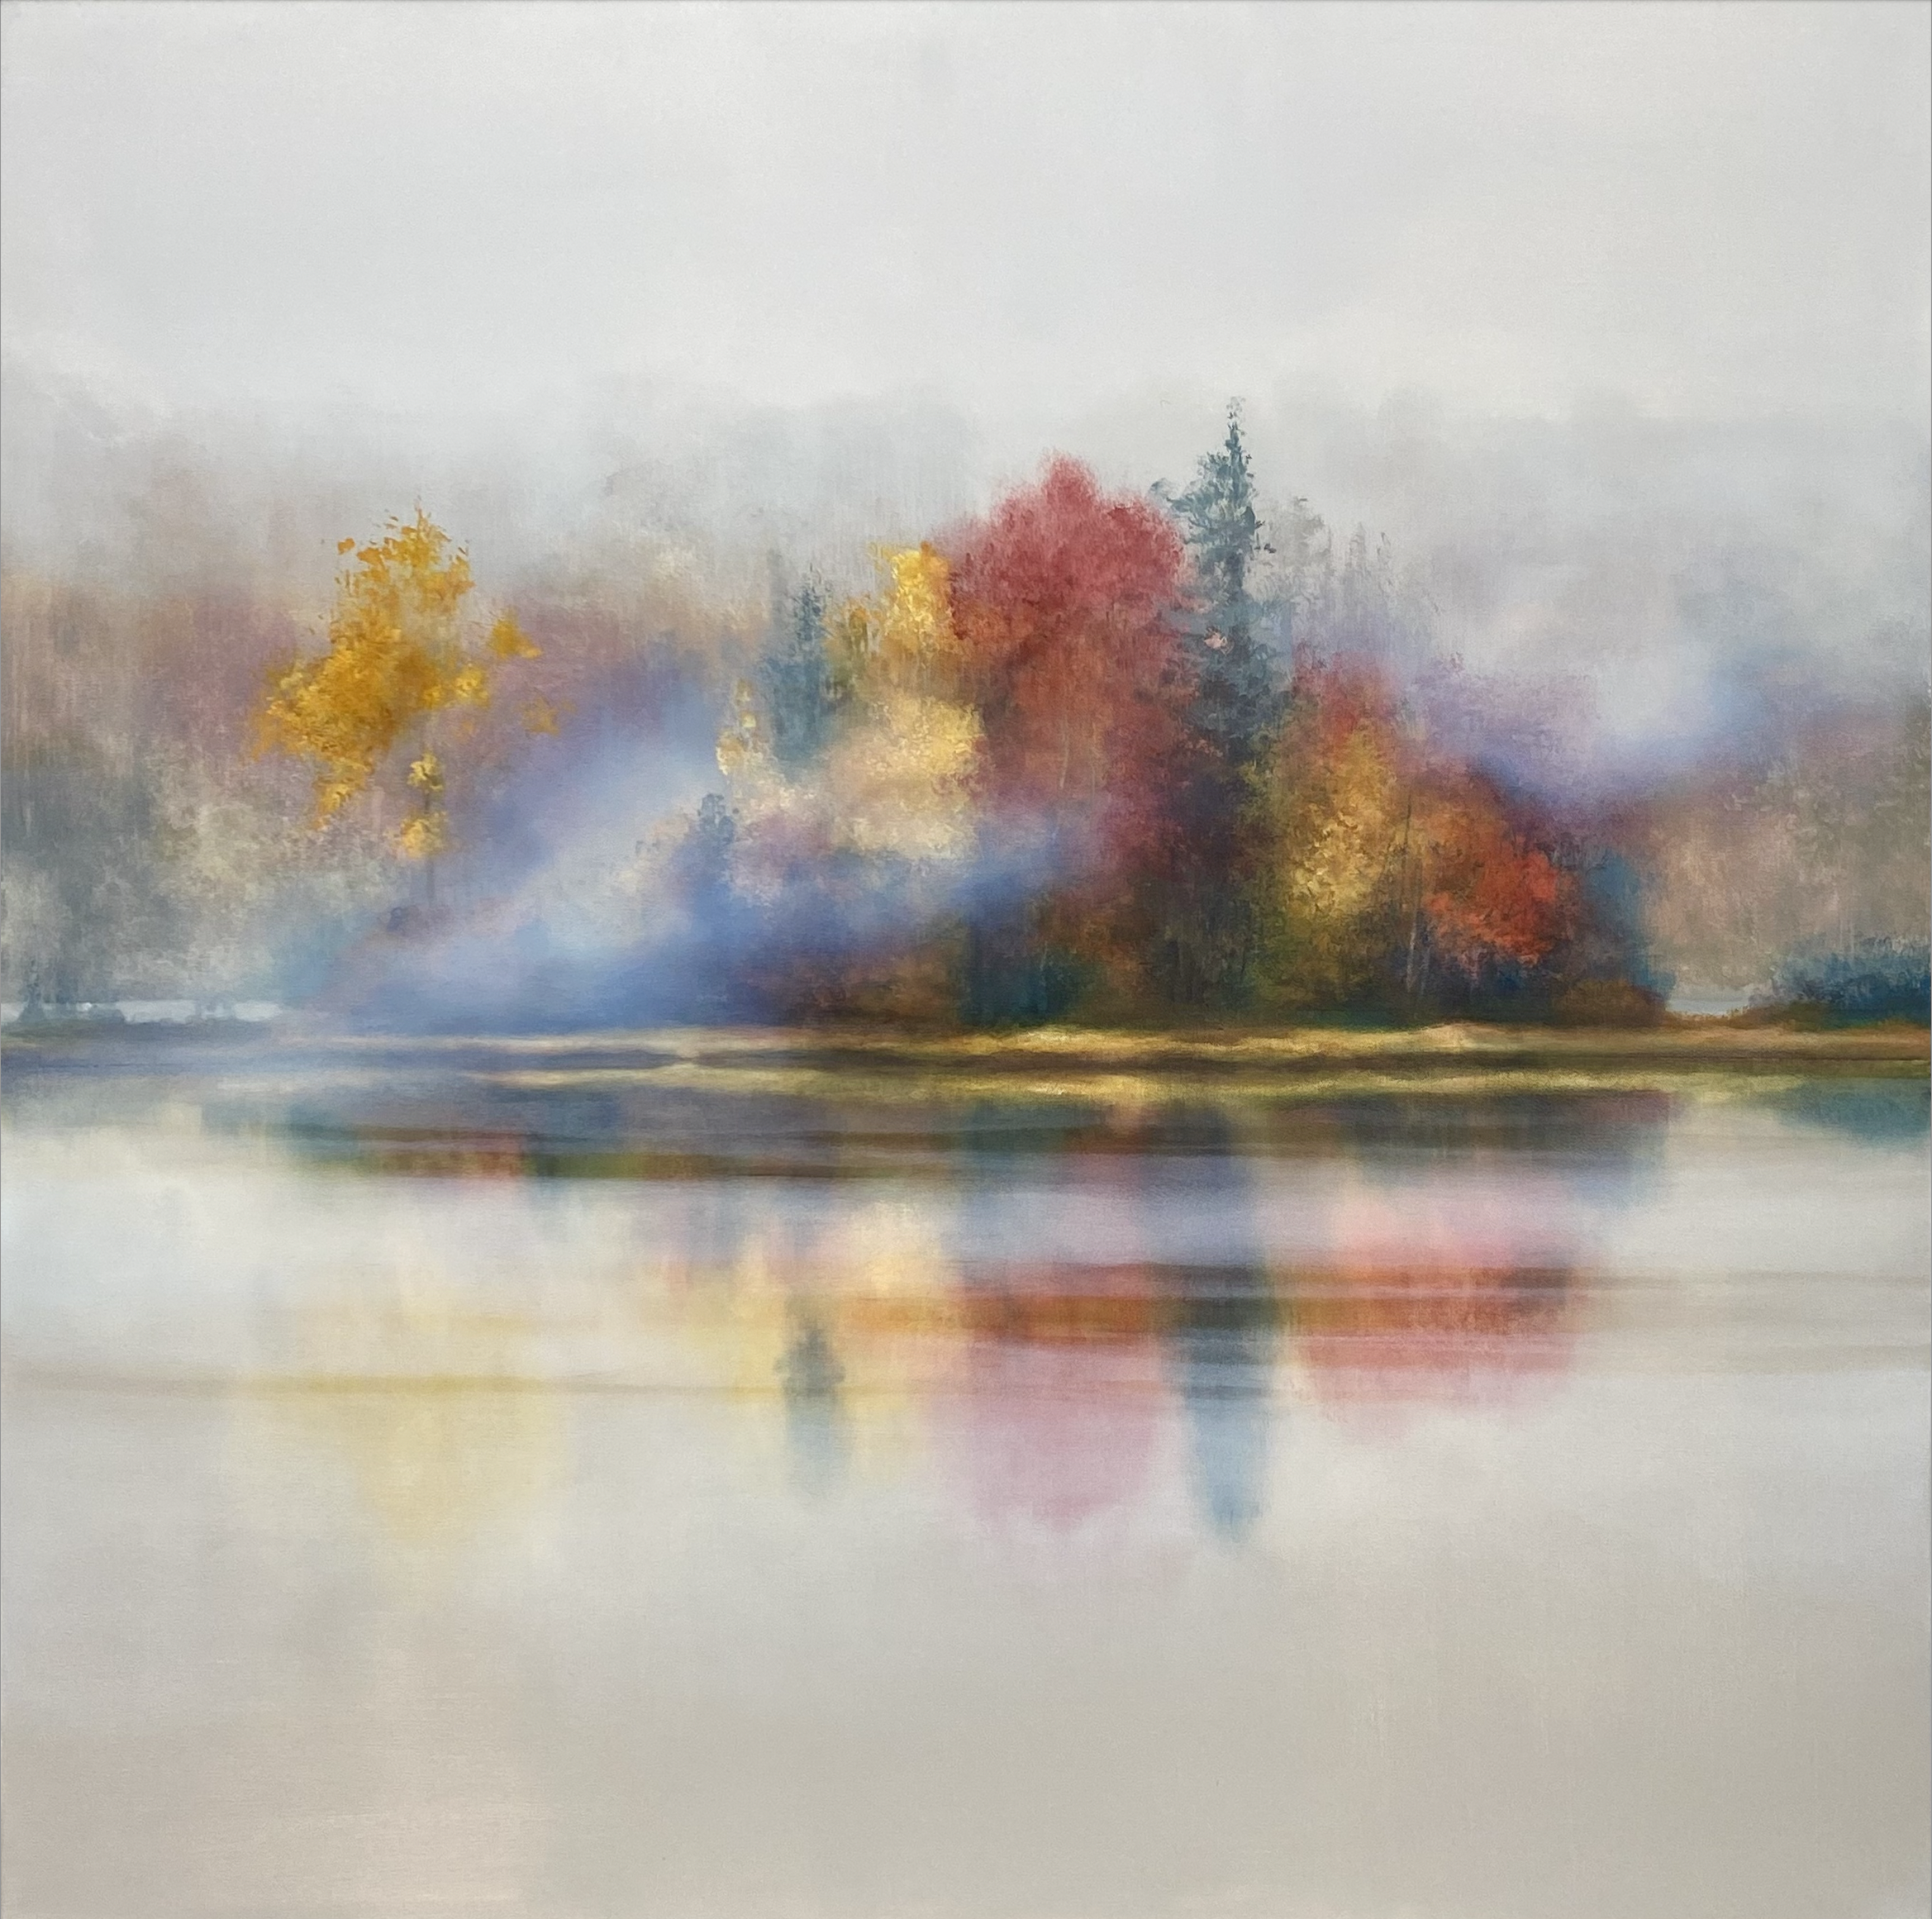 Misty autumn landscape painting by Jane Bronsch.